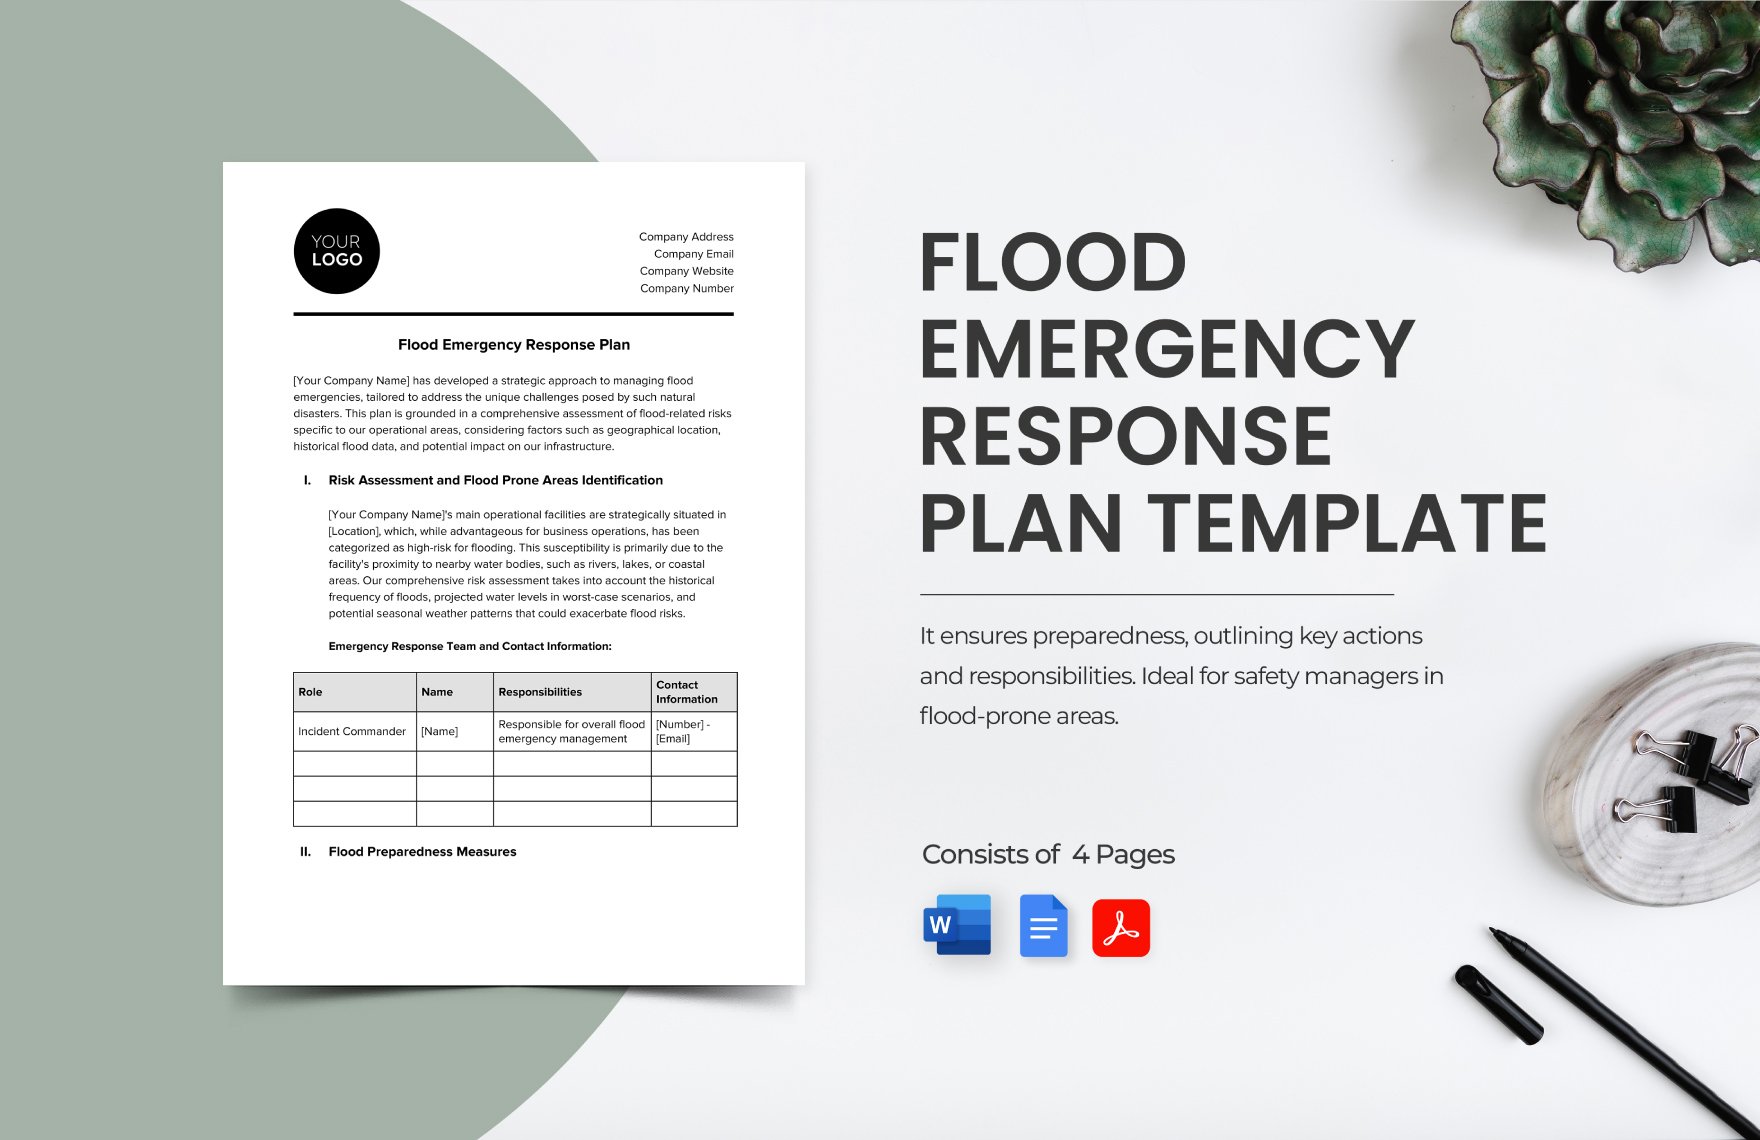 Flood Emergency Response Plan Template in Word, Google Docs, PDF